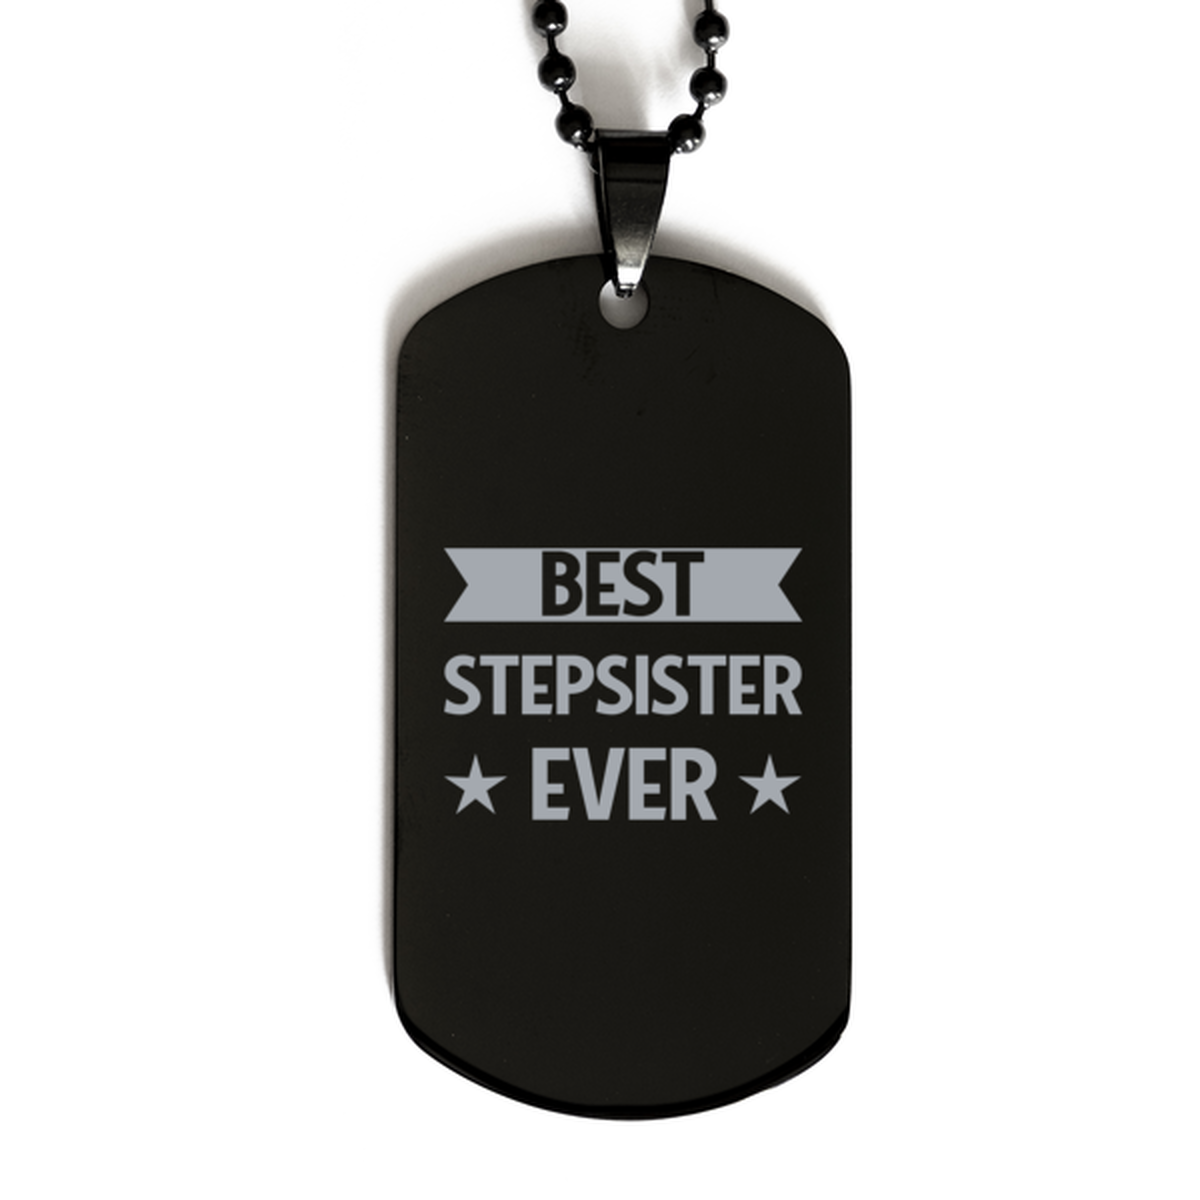 Best Stepsister Ever Stepsister Gifts, Funny Black Dog Tag For Stepsister, Birthday Family Presents Engraved Necklace For Women